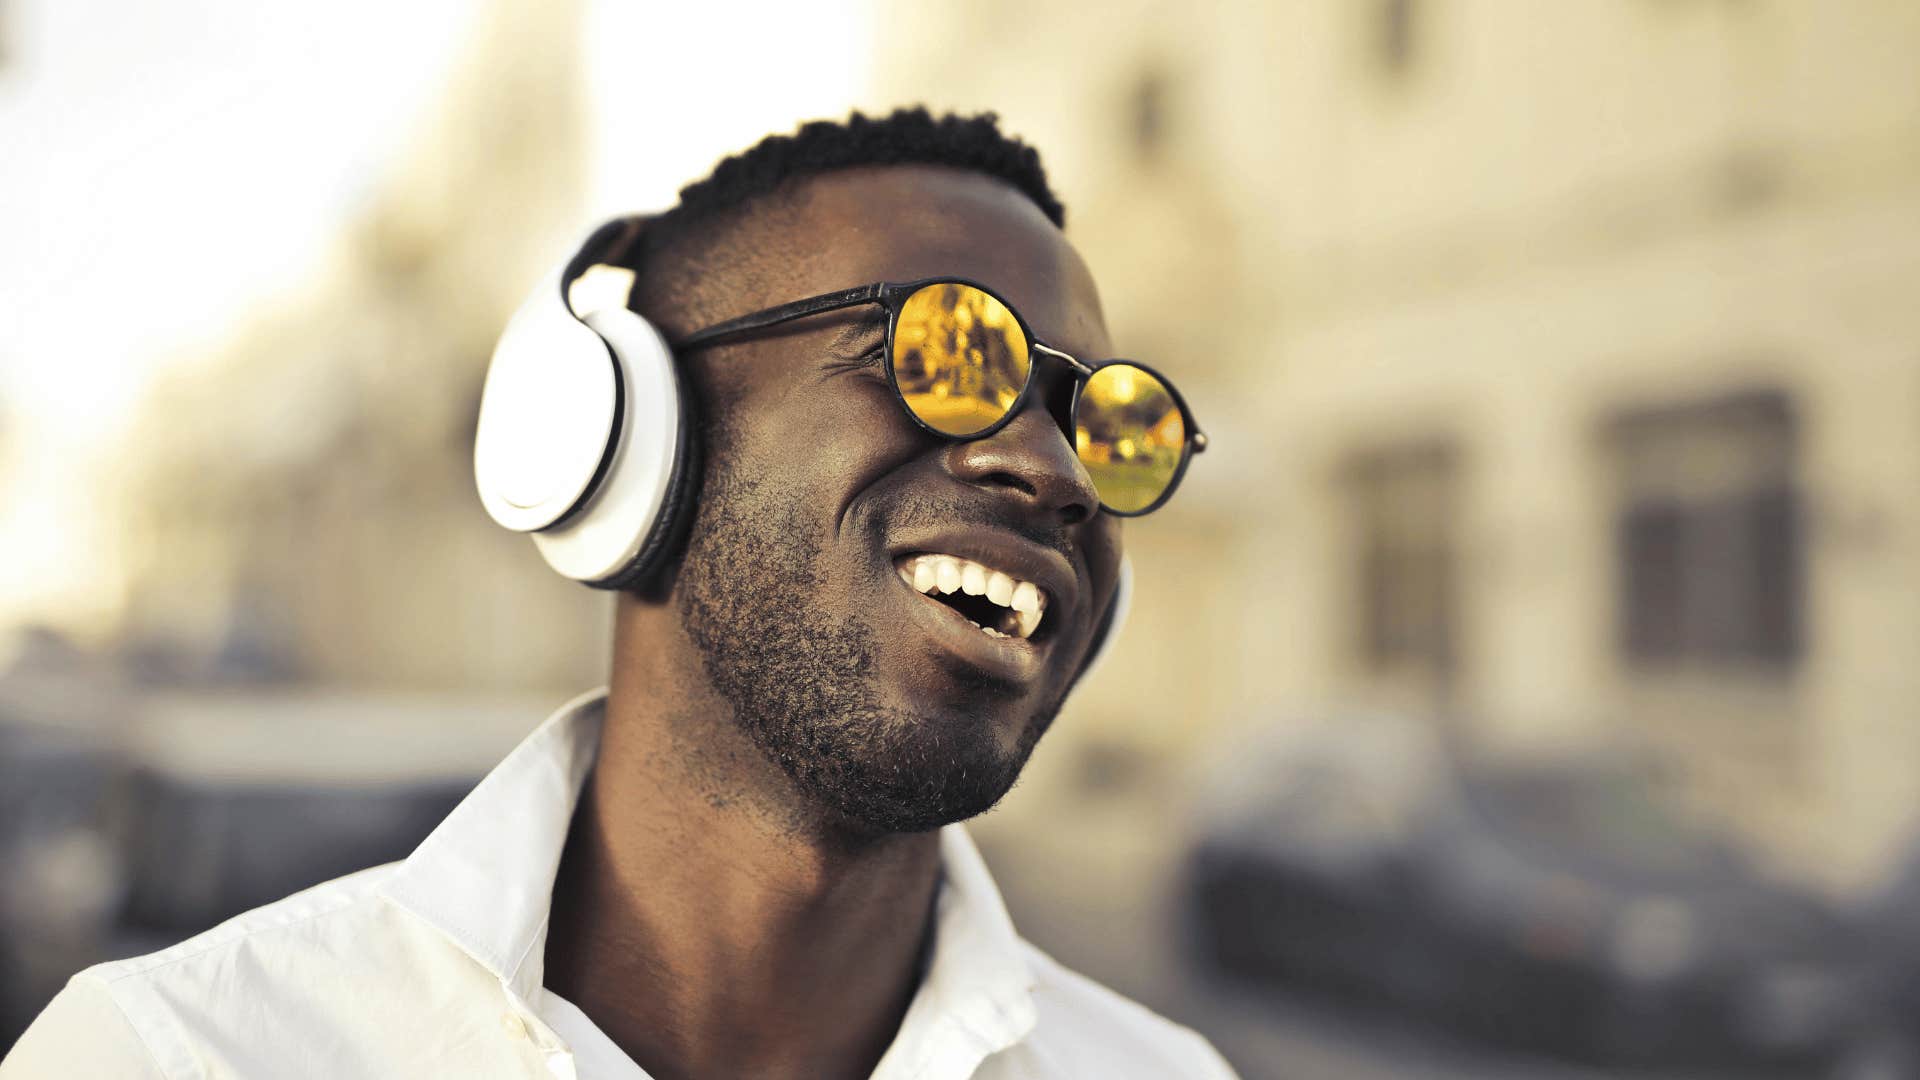 happy man focusing on the present wearing headphones